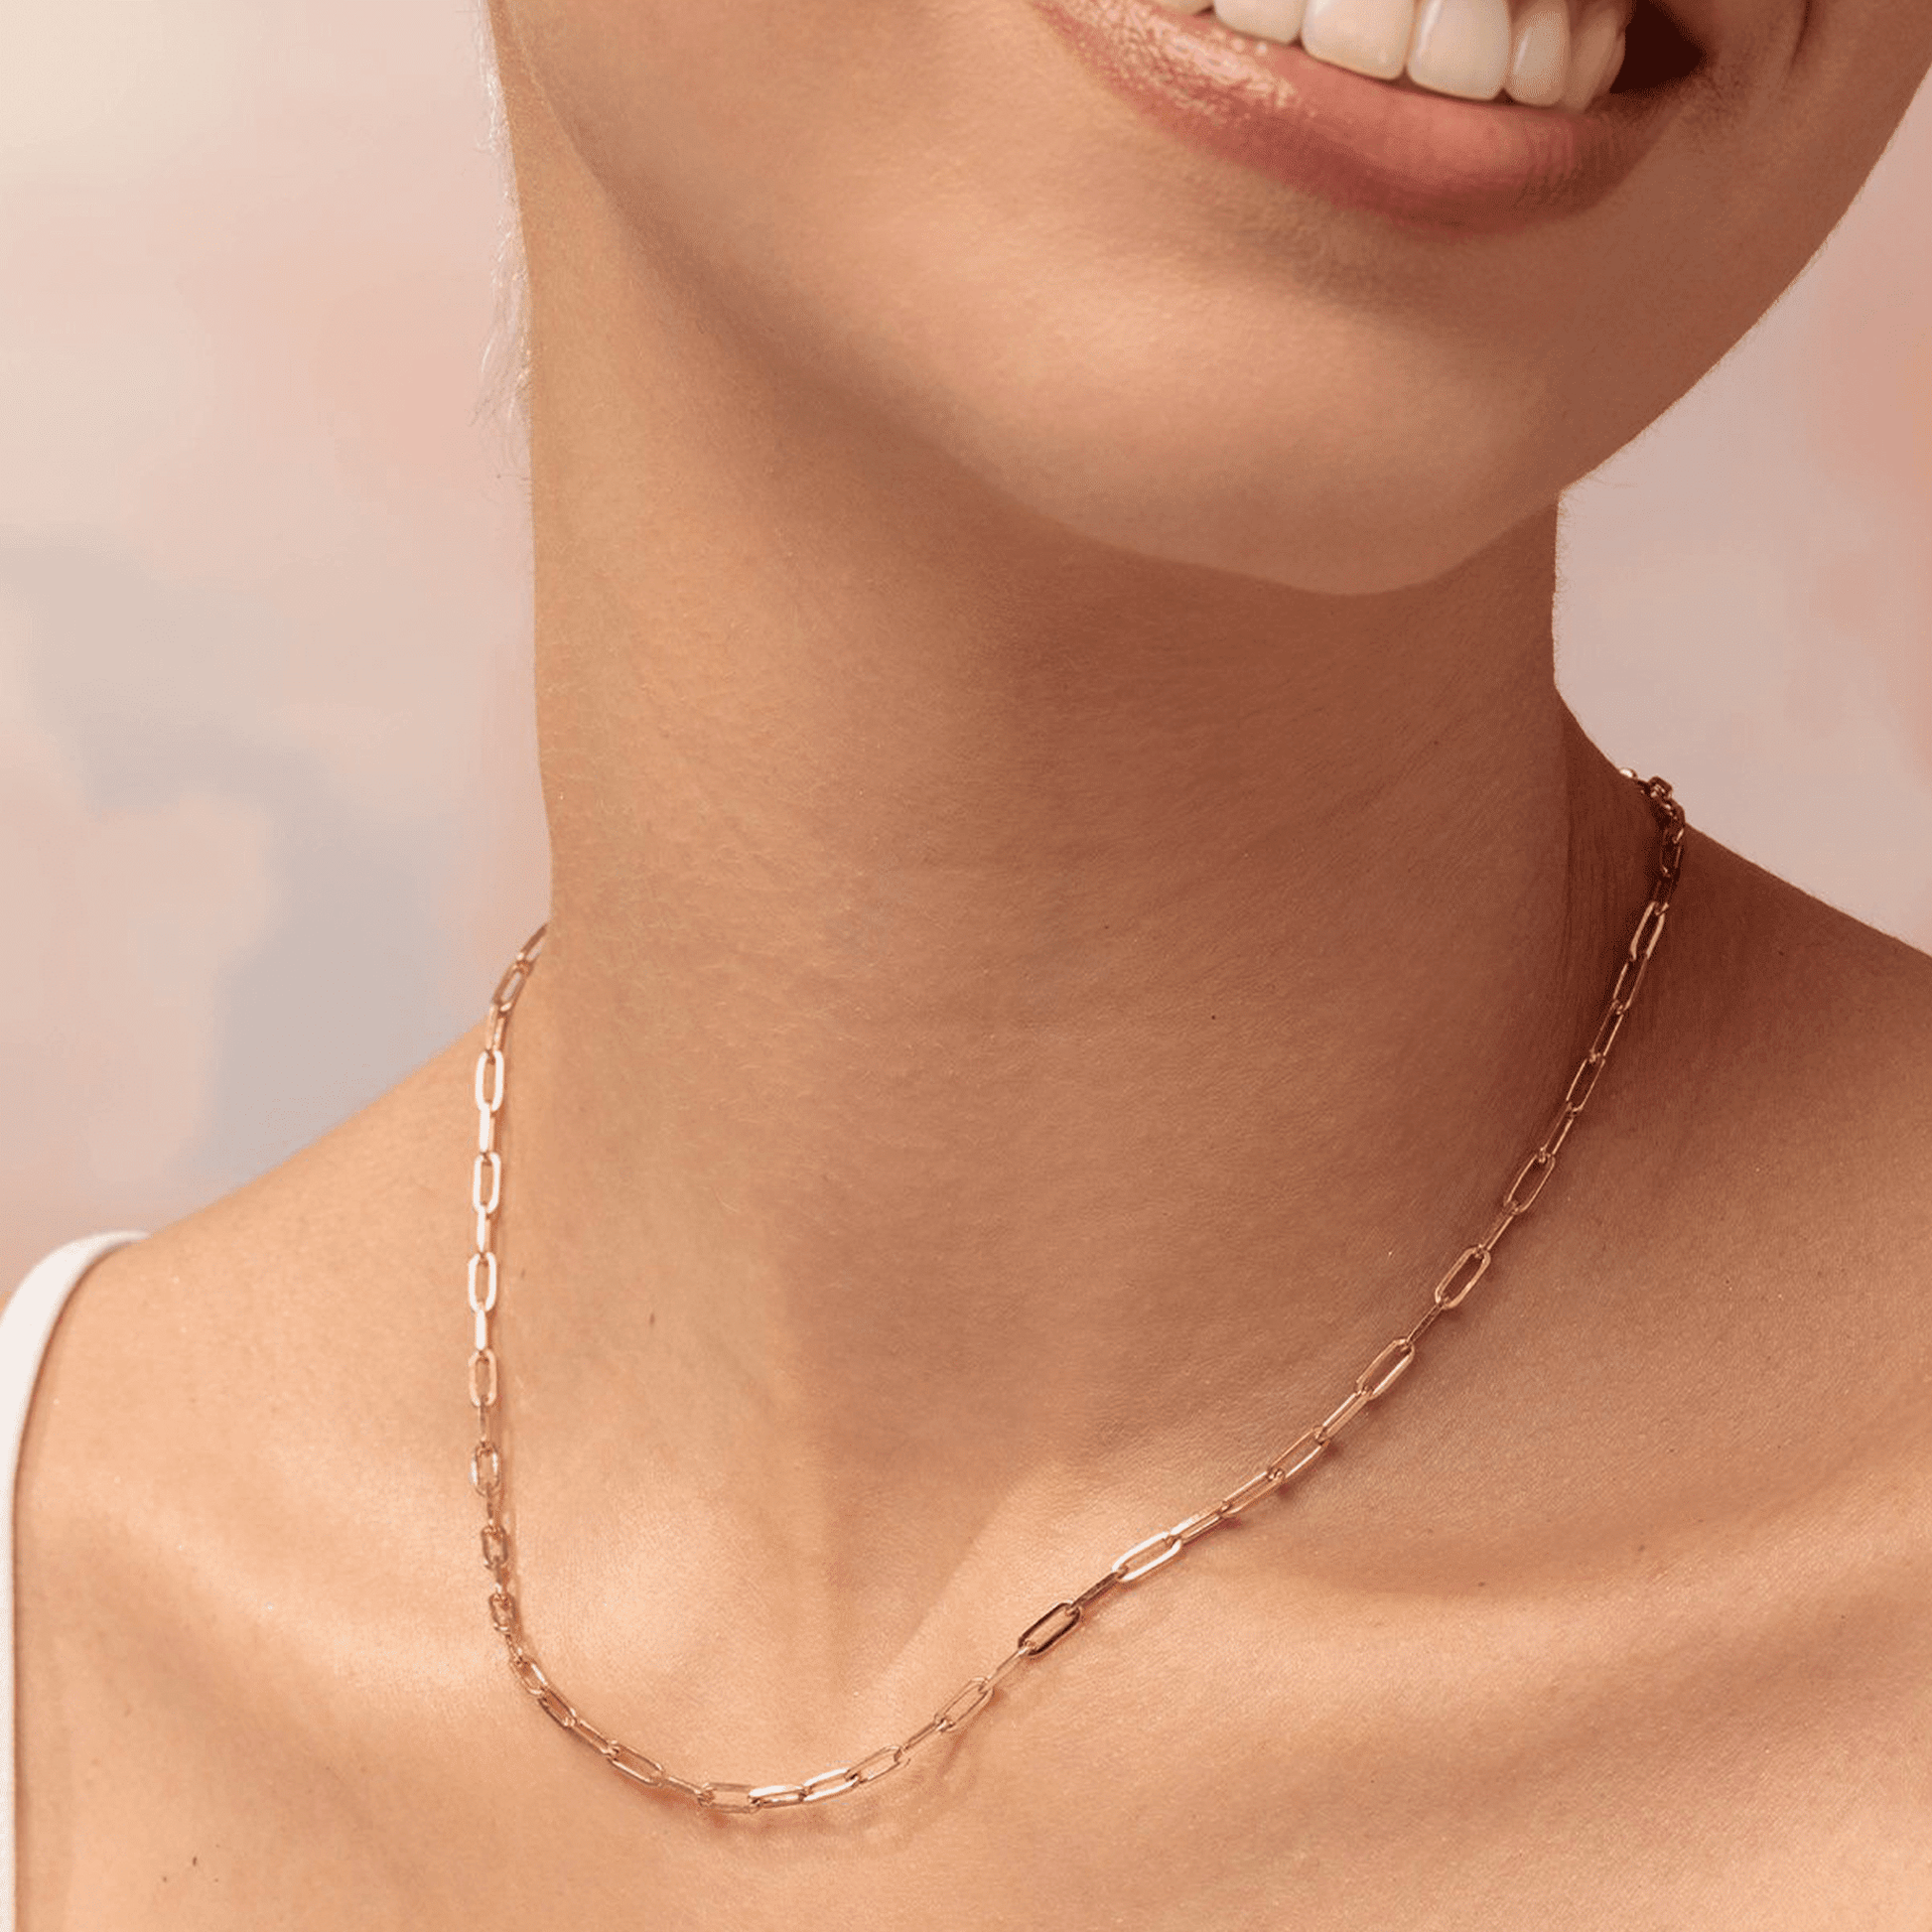 Links Chain Necklace - 18K Gold Vermeil Chains magal-dev 